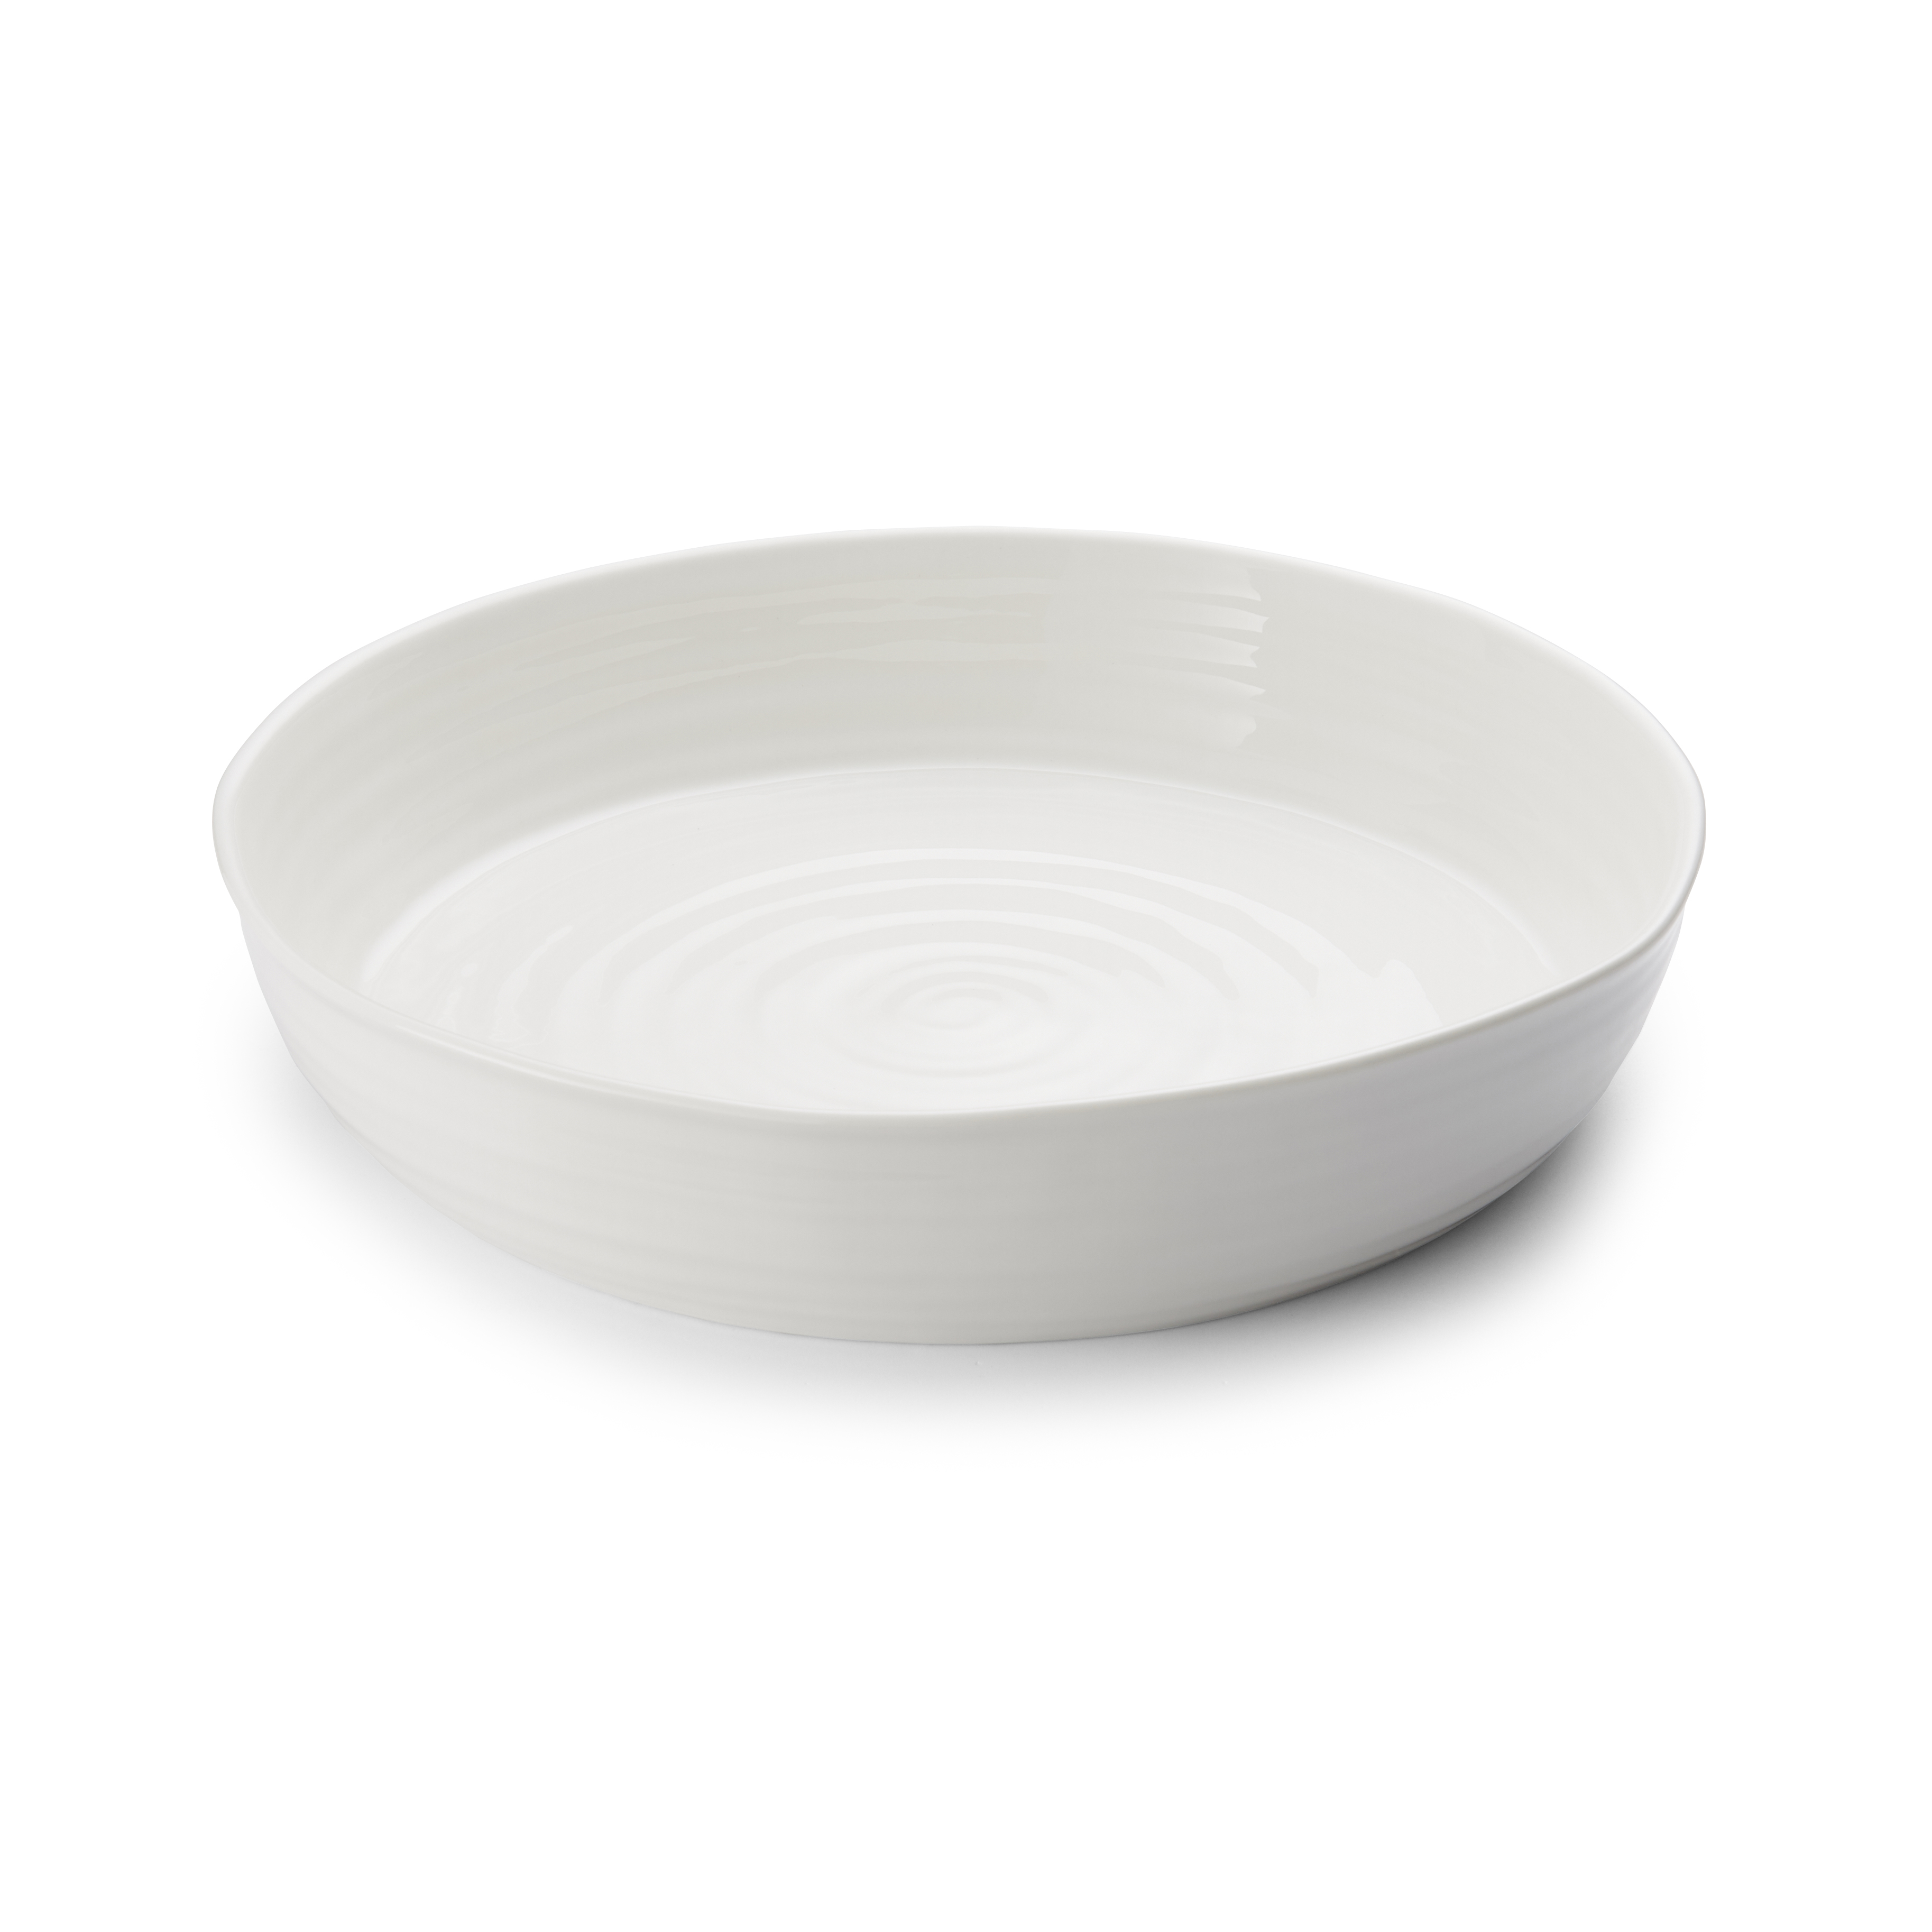 Sophie Conran White Round Roasting Dish image number null